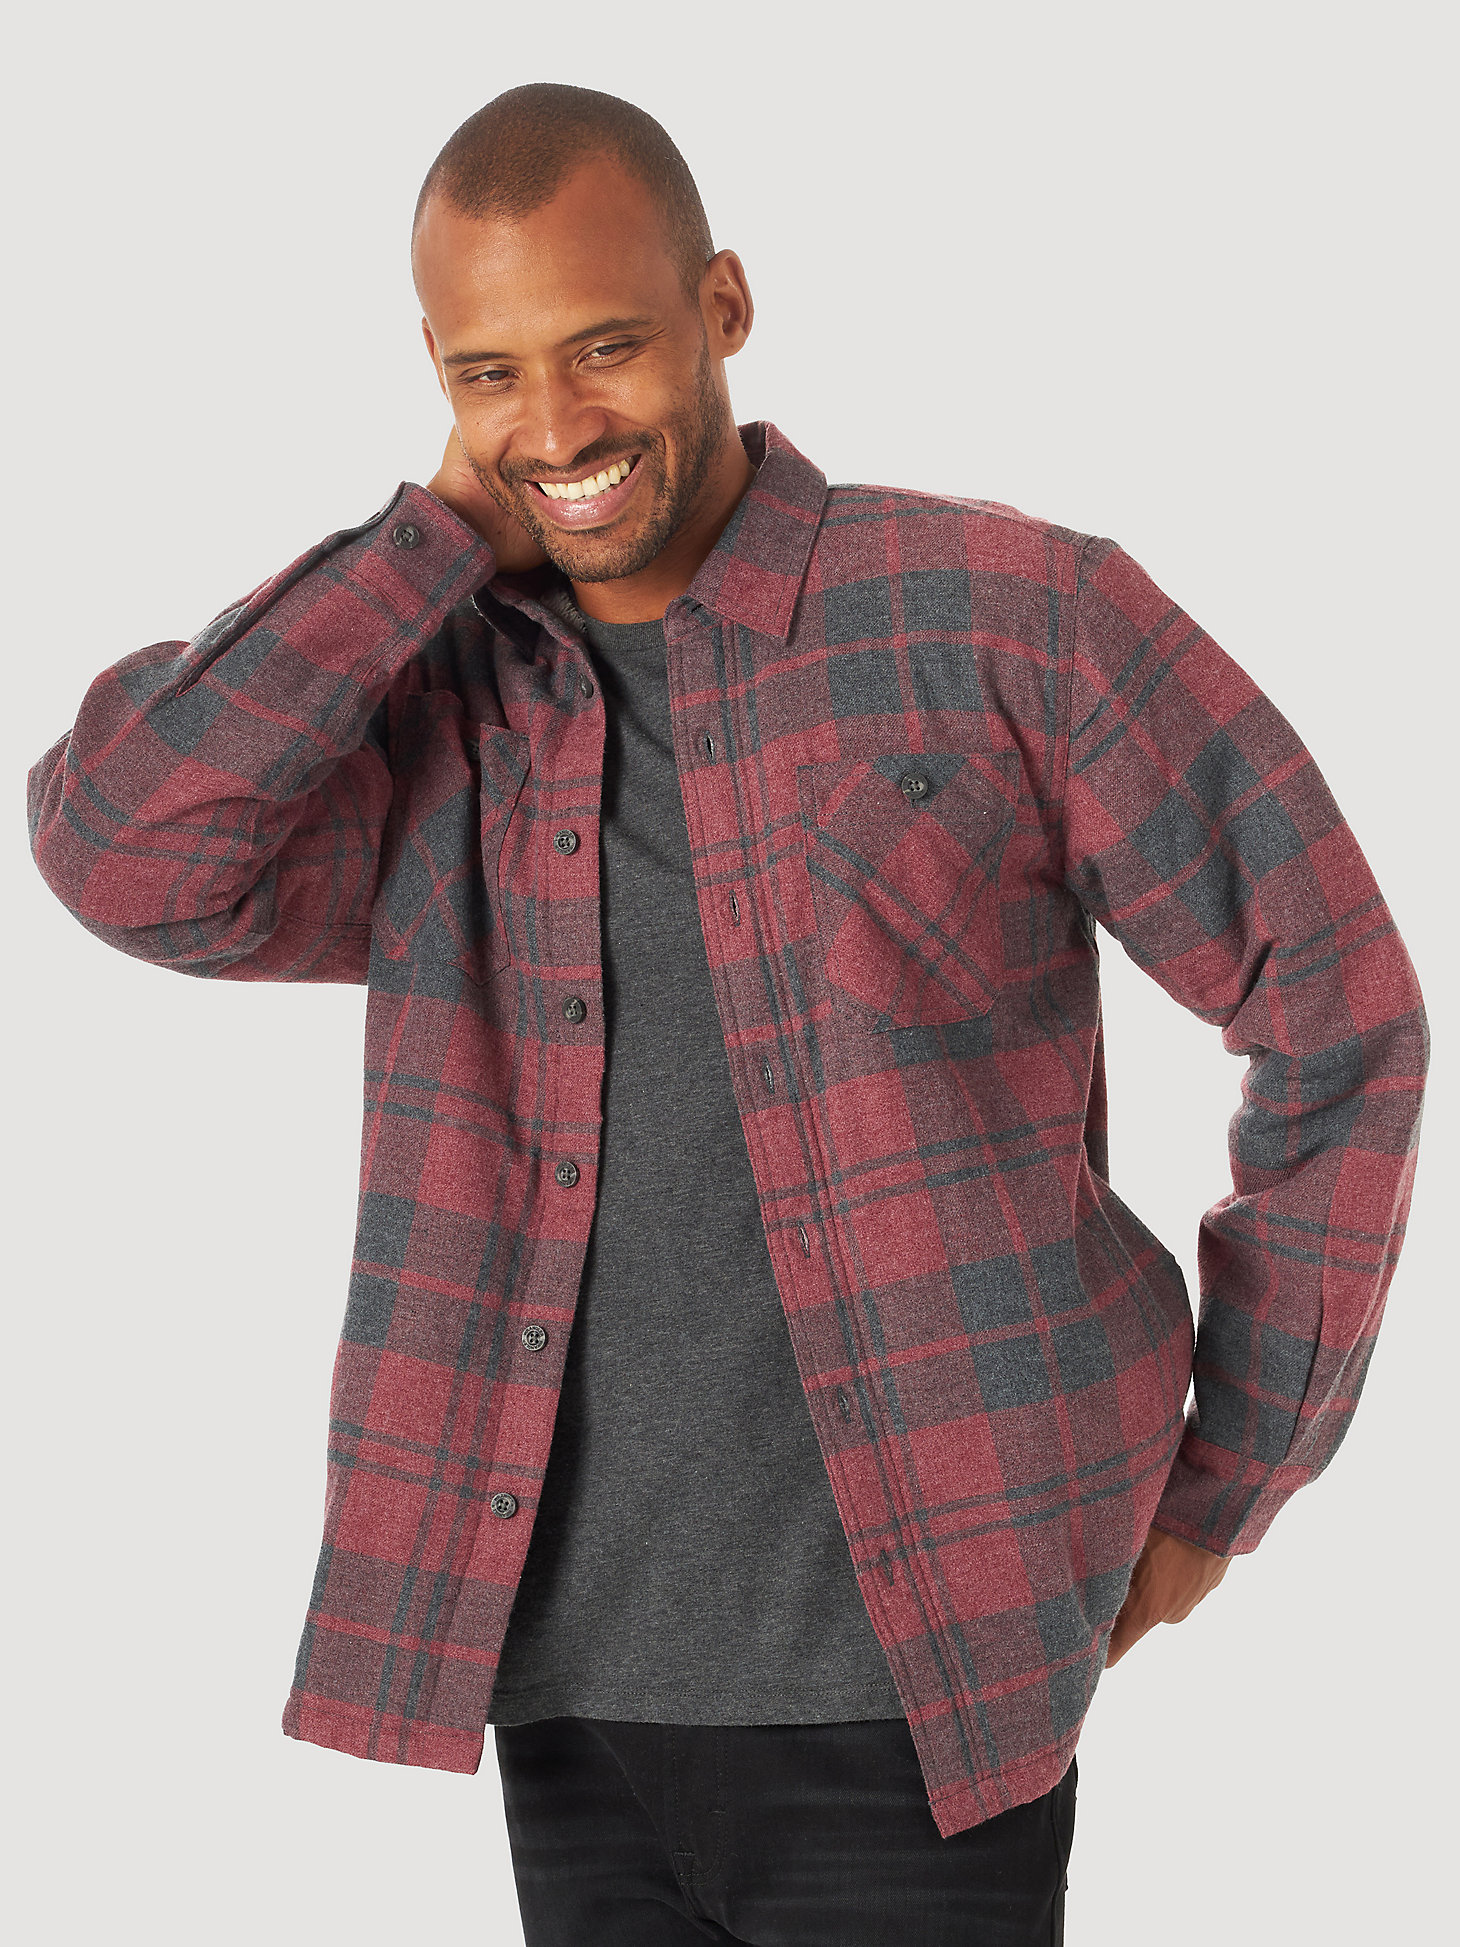 Men's Wrangler® Authentics Sherpa Lined Flannel Shirt in Zinfindel Heather main view